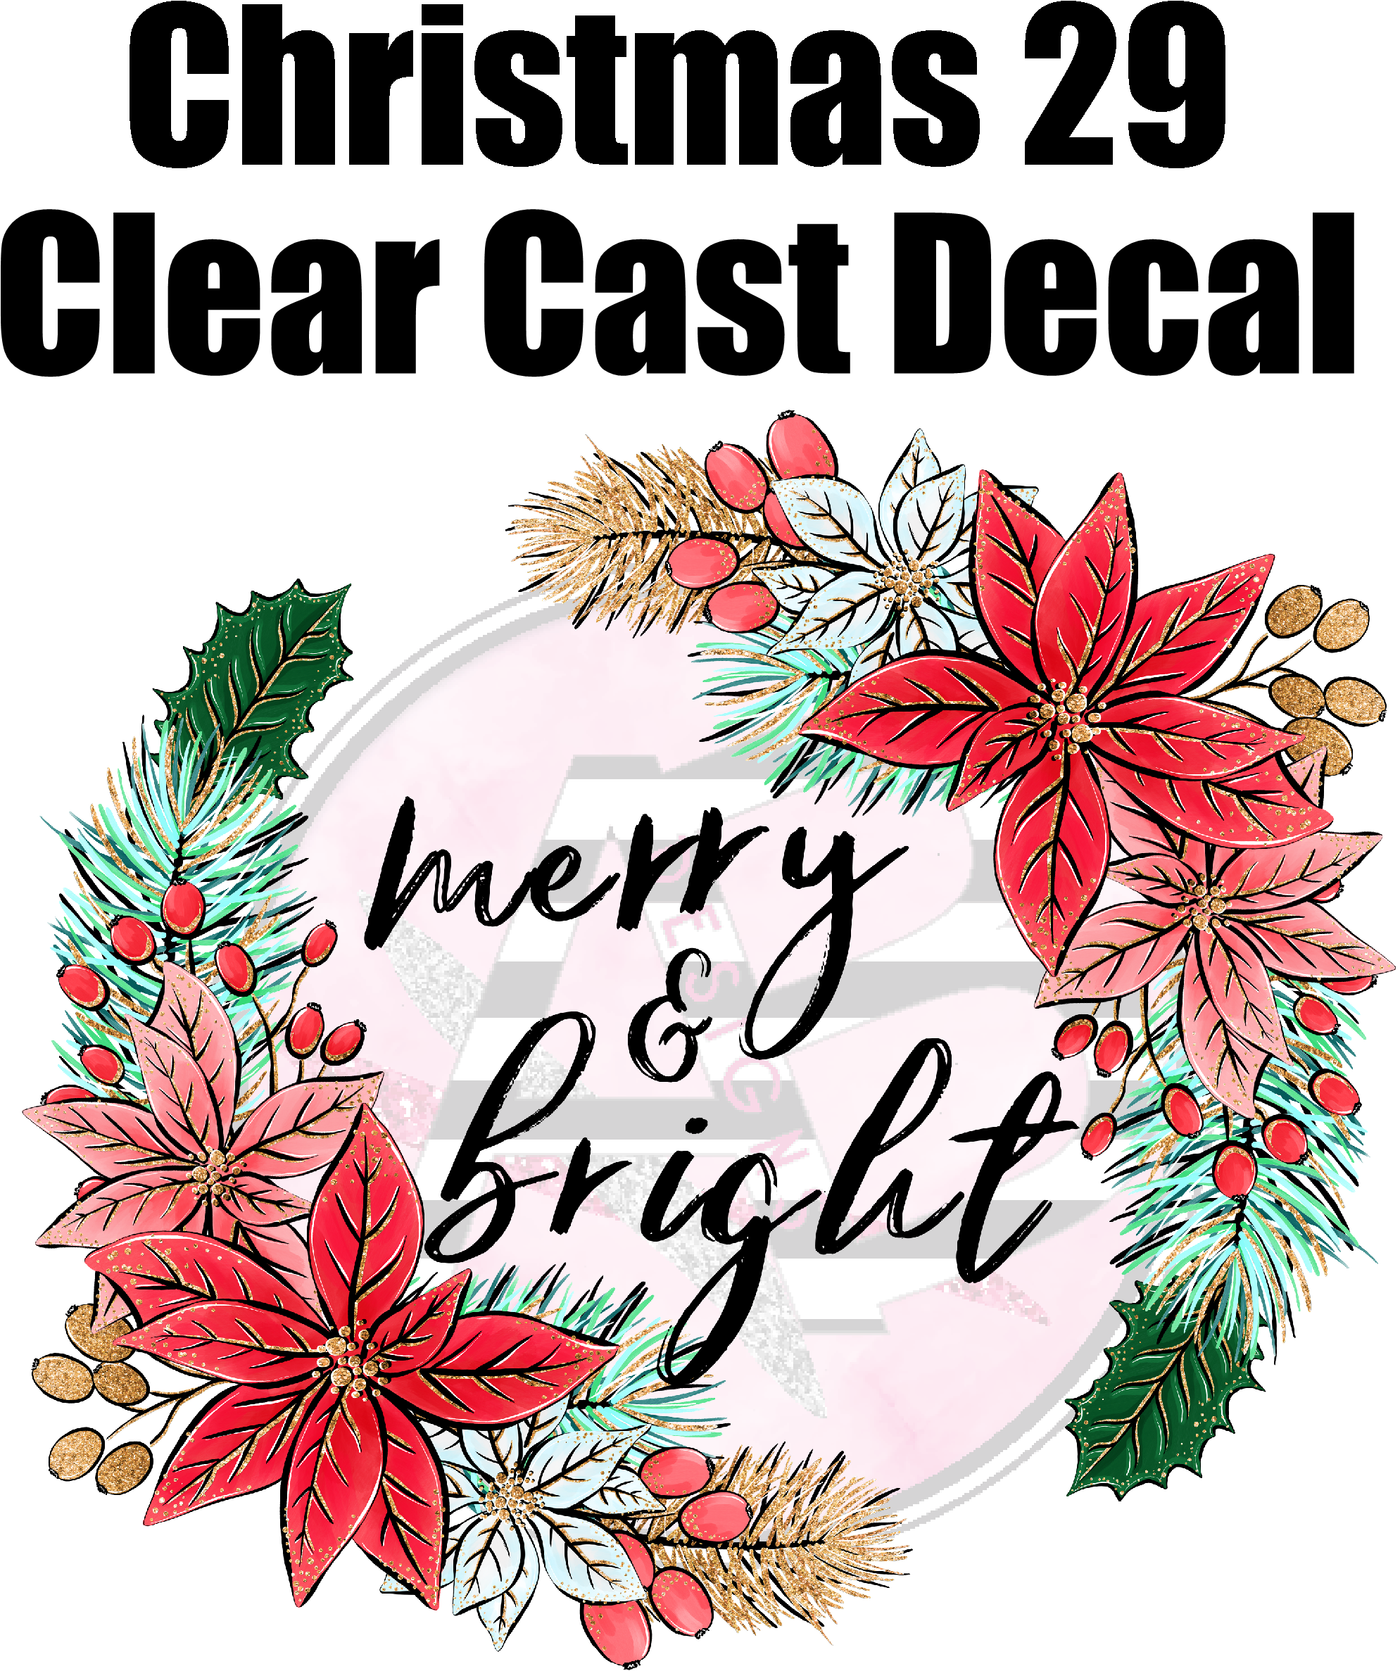 Christmas 29 - Clear Cast Decal